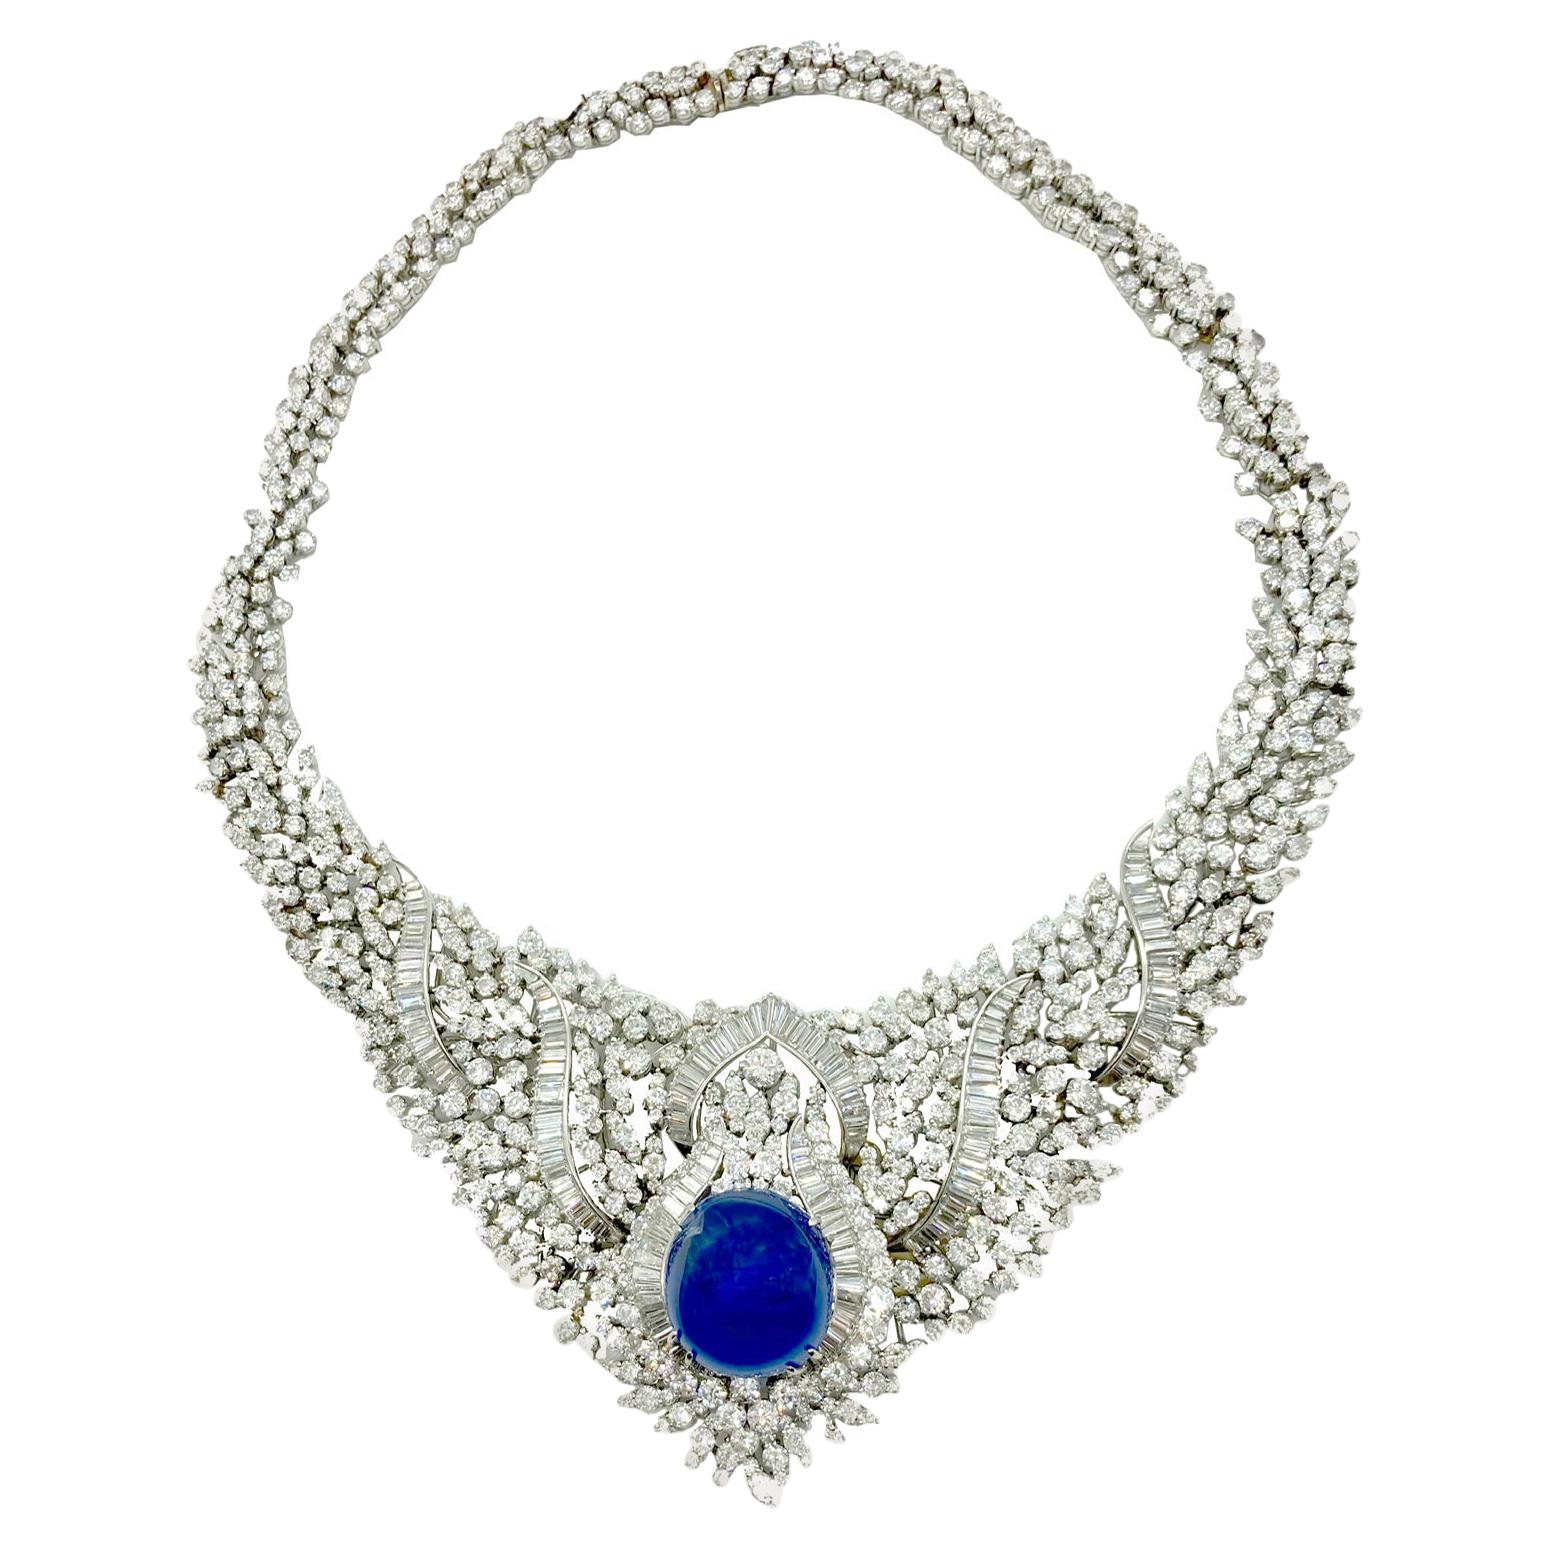 Important Retro Diamond Statement Necklace with 39 Carat Cabochon Sapphire For Sale